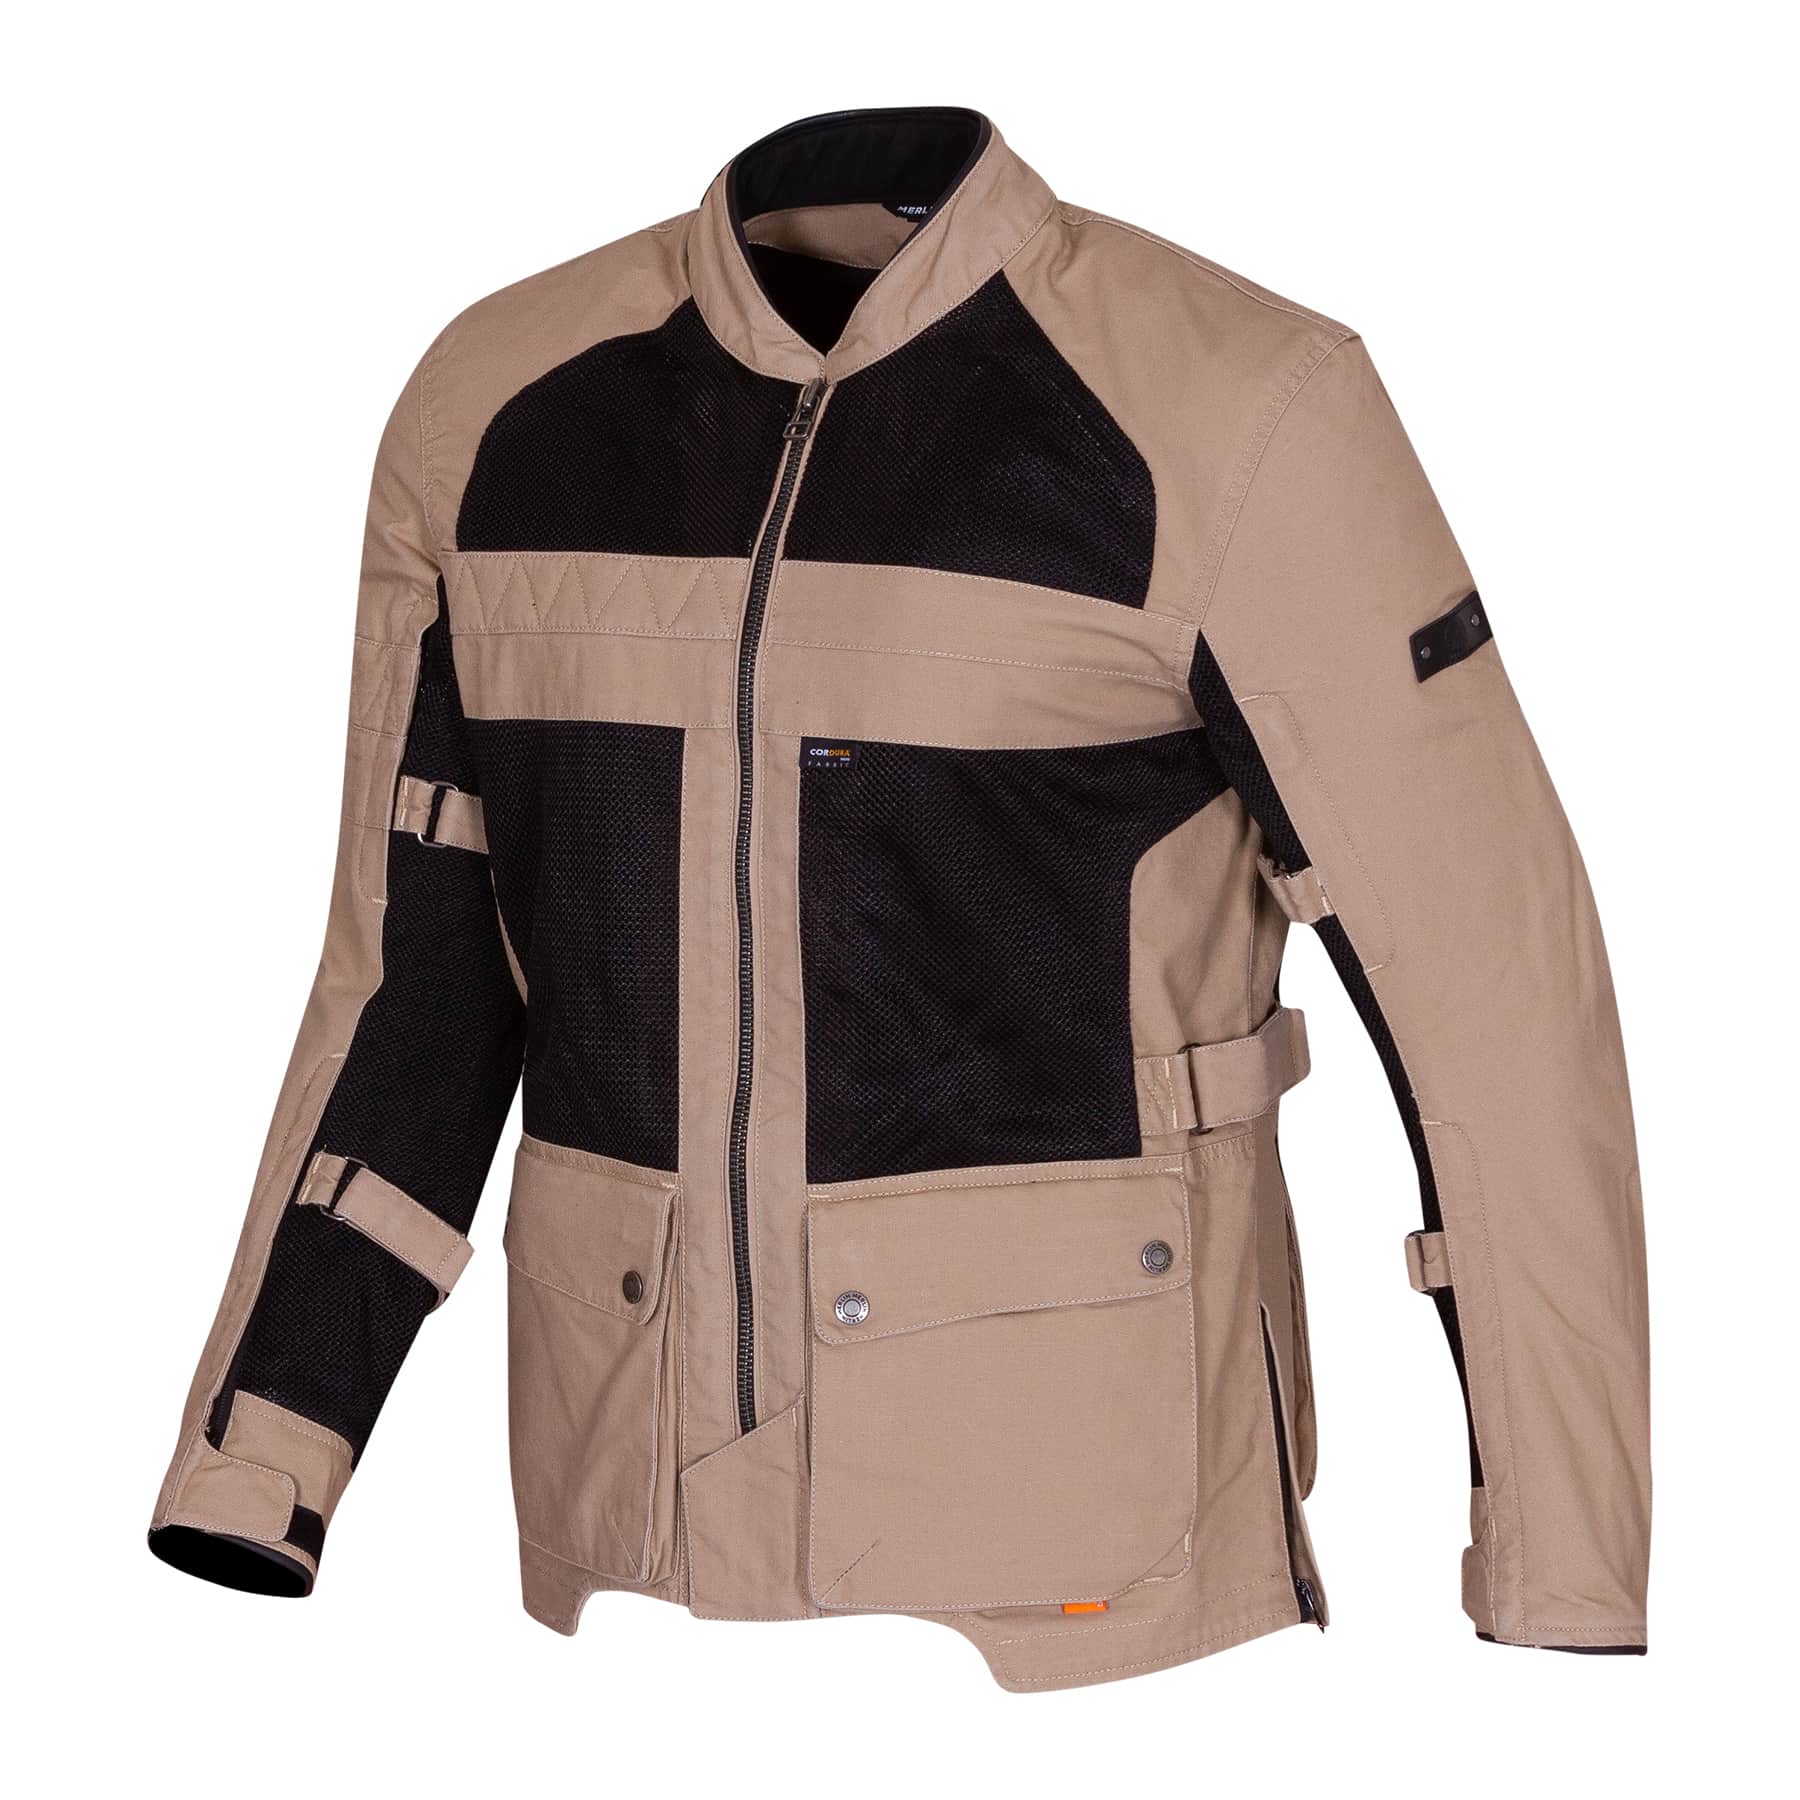 Merlin Mahala Raid D3O Explorer motorcycle jacket in black/sand